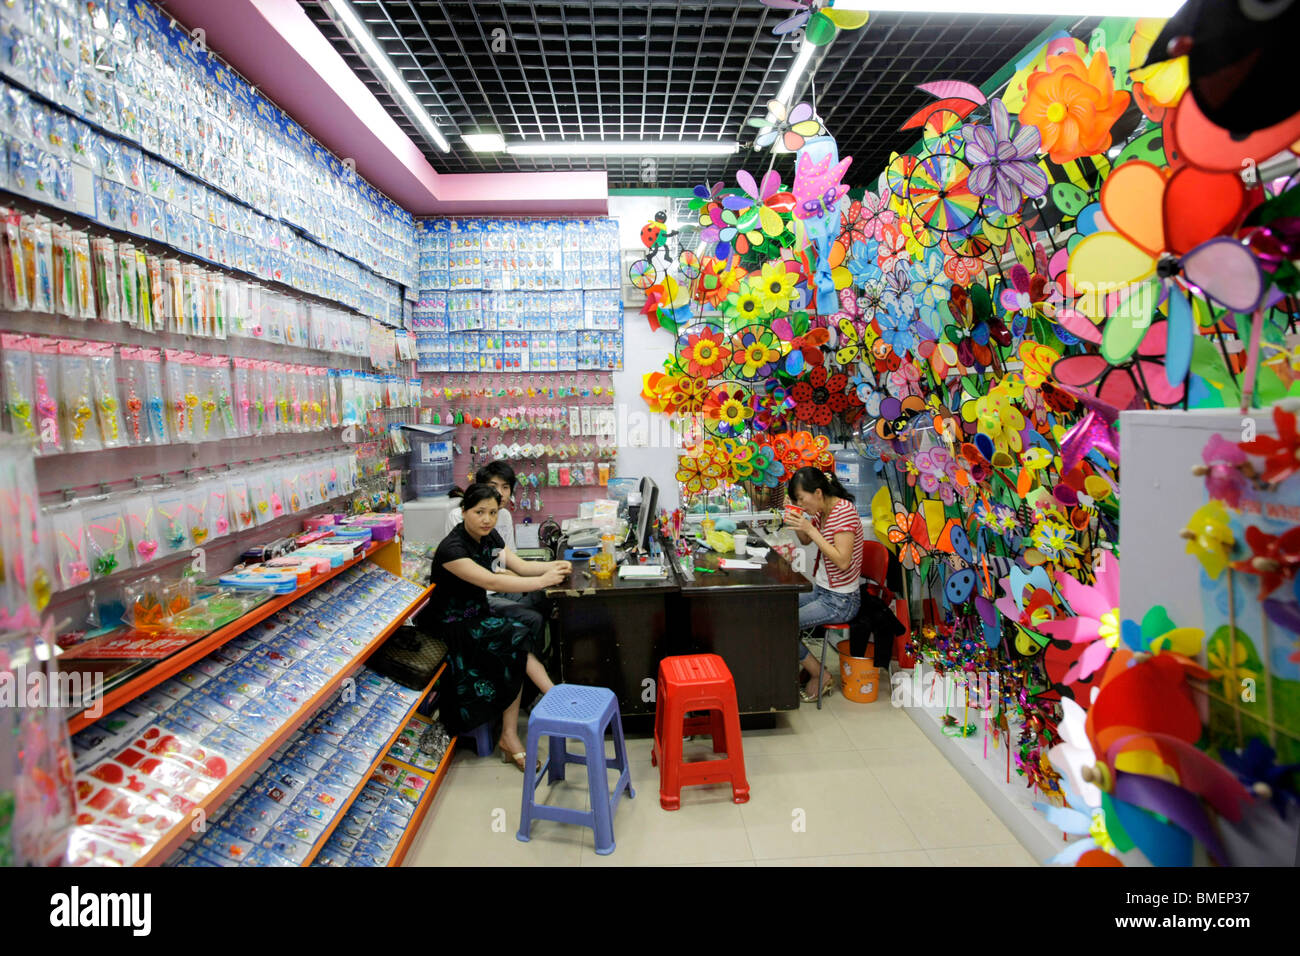 https://c8.alamy.com/comp/BMEP37/store-selling-pinwheels-and-assortment-of-digital-toys-in-yiwu-market-BMEP37.jpg